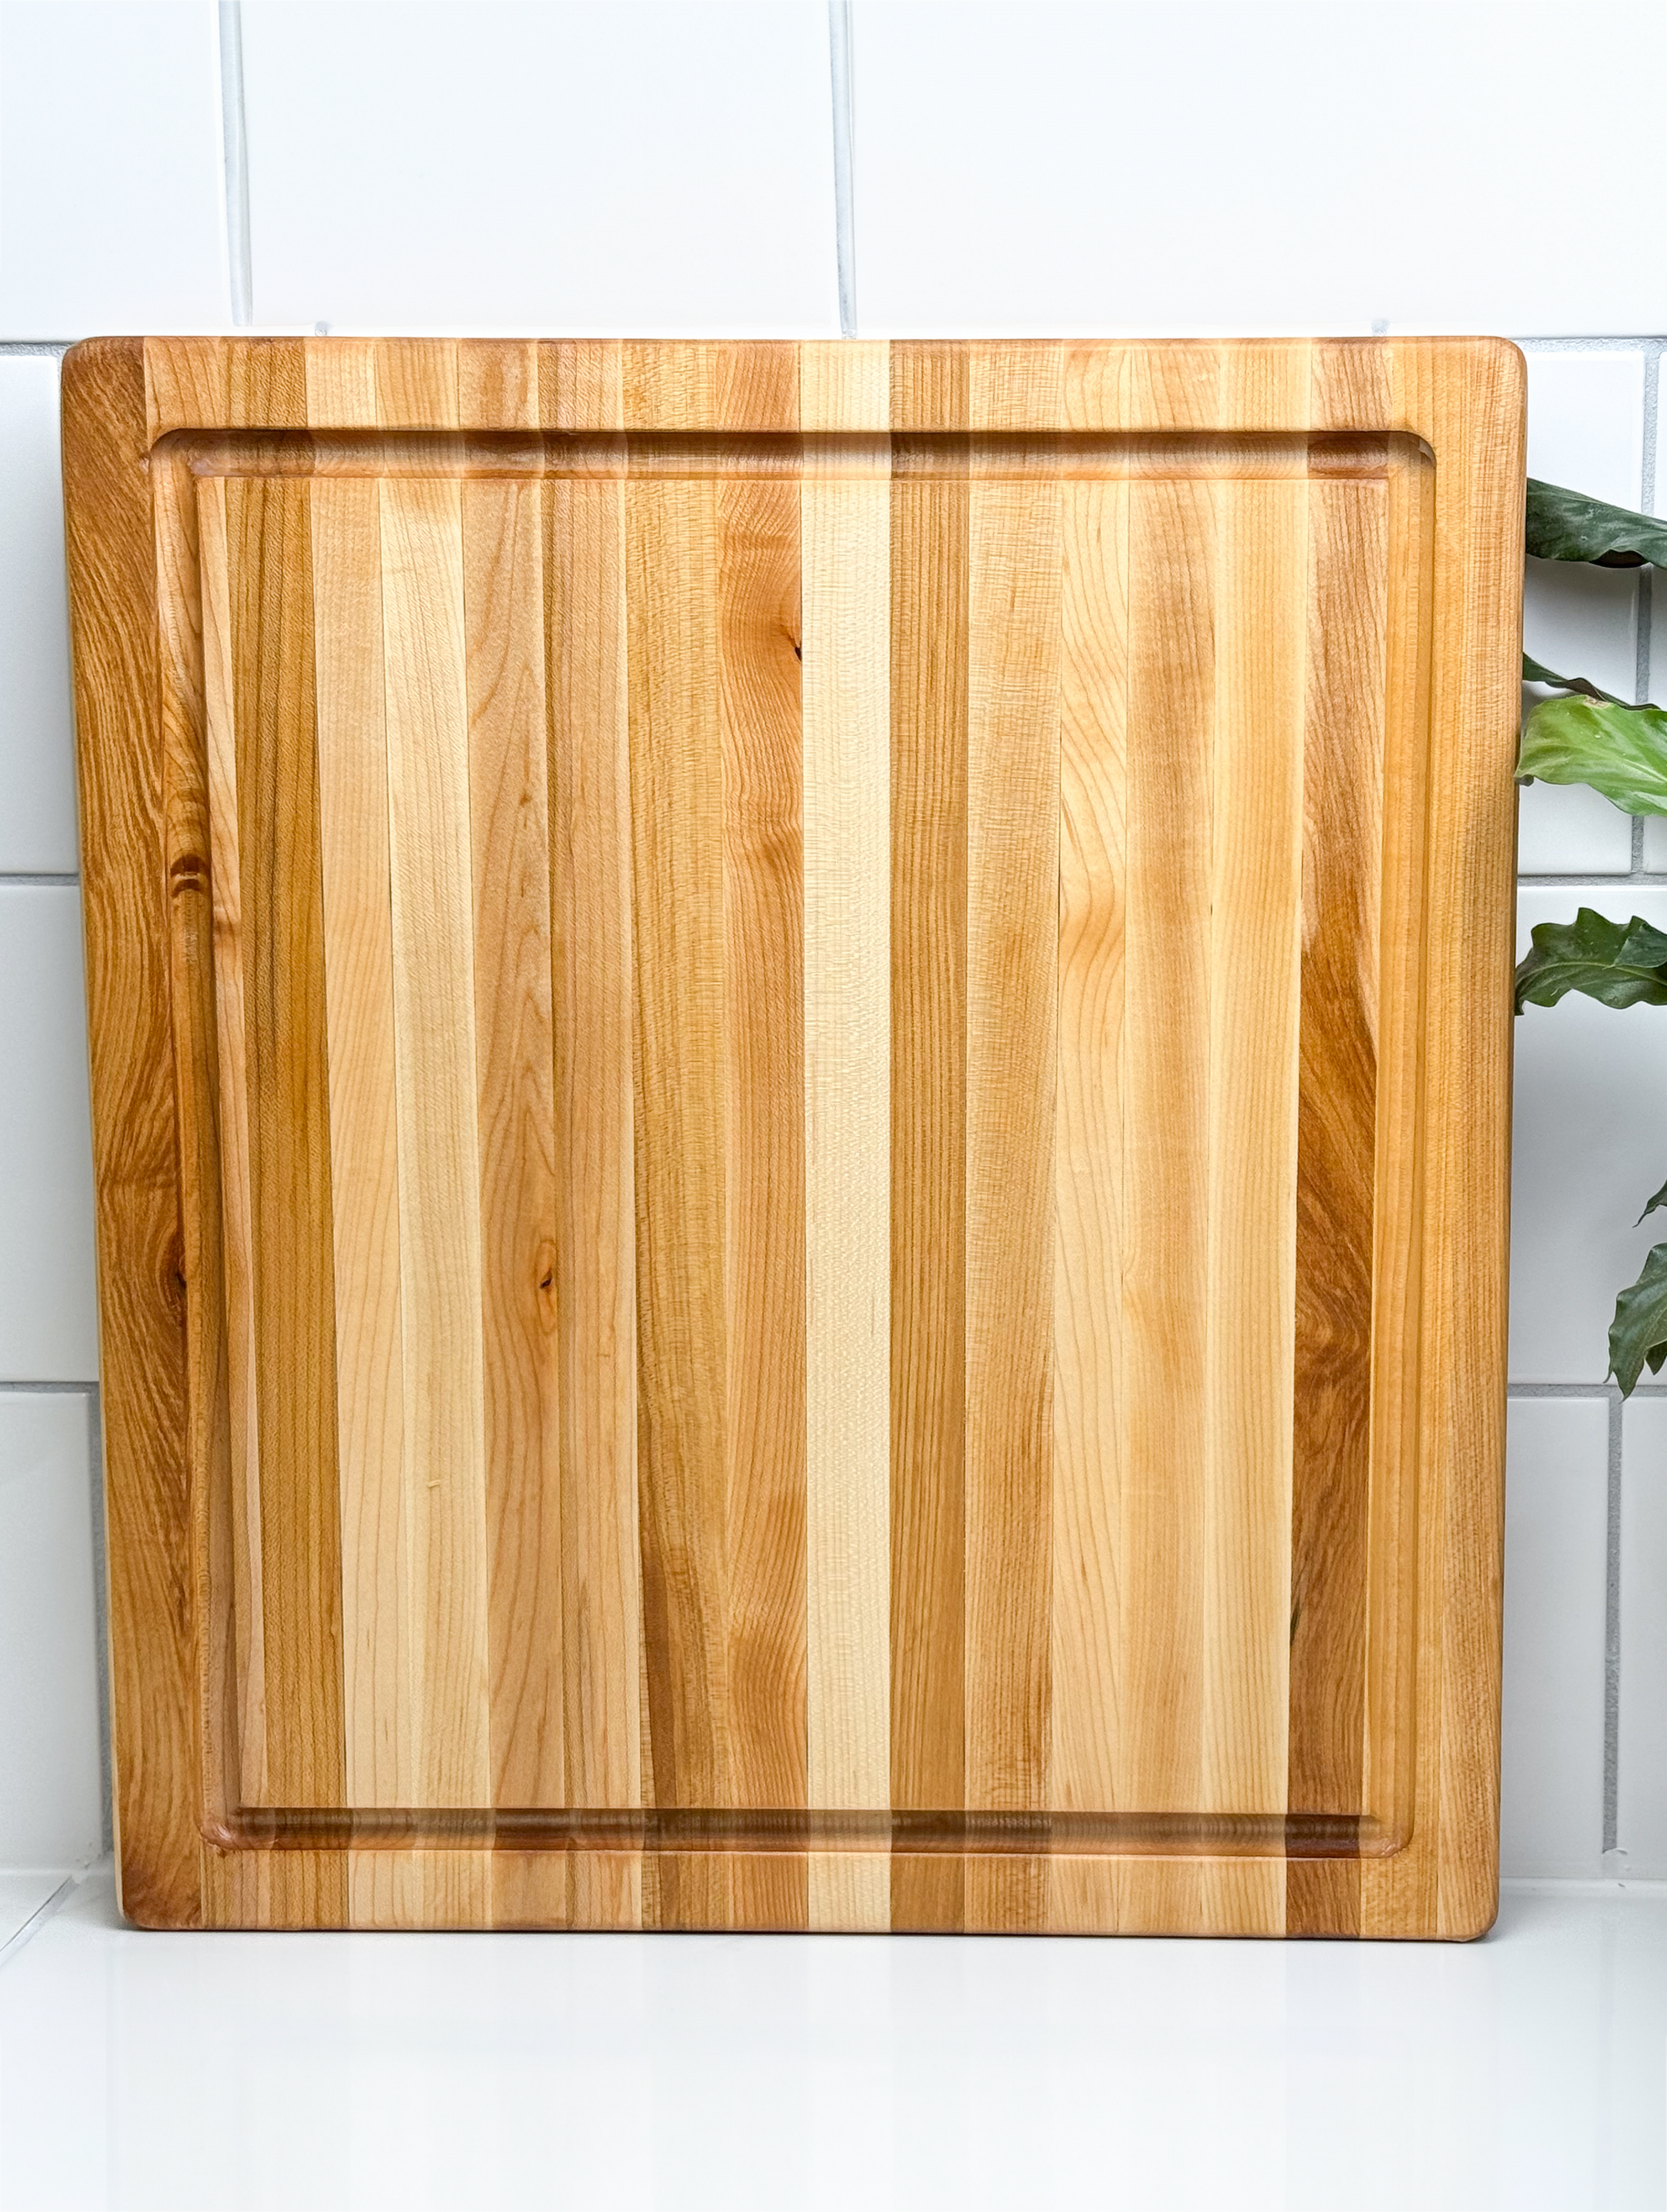 THE HOMESTEAD: 18x16 Edge Grain Maple Cutting Boards